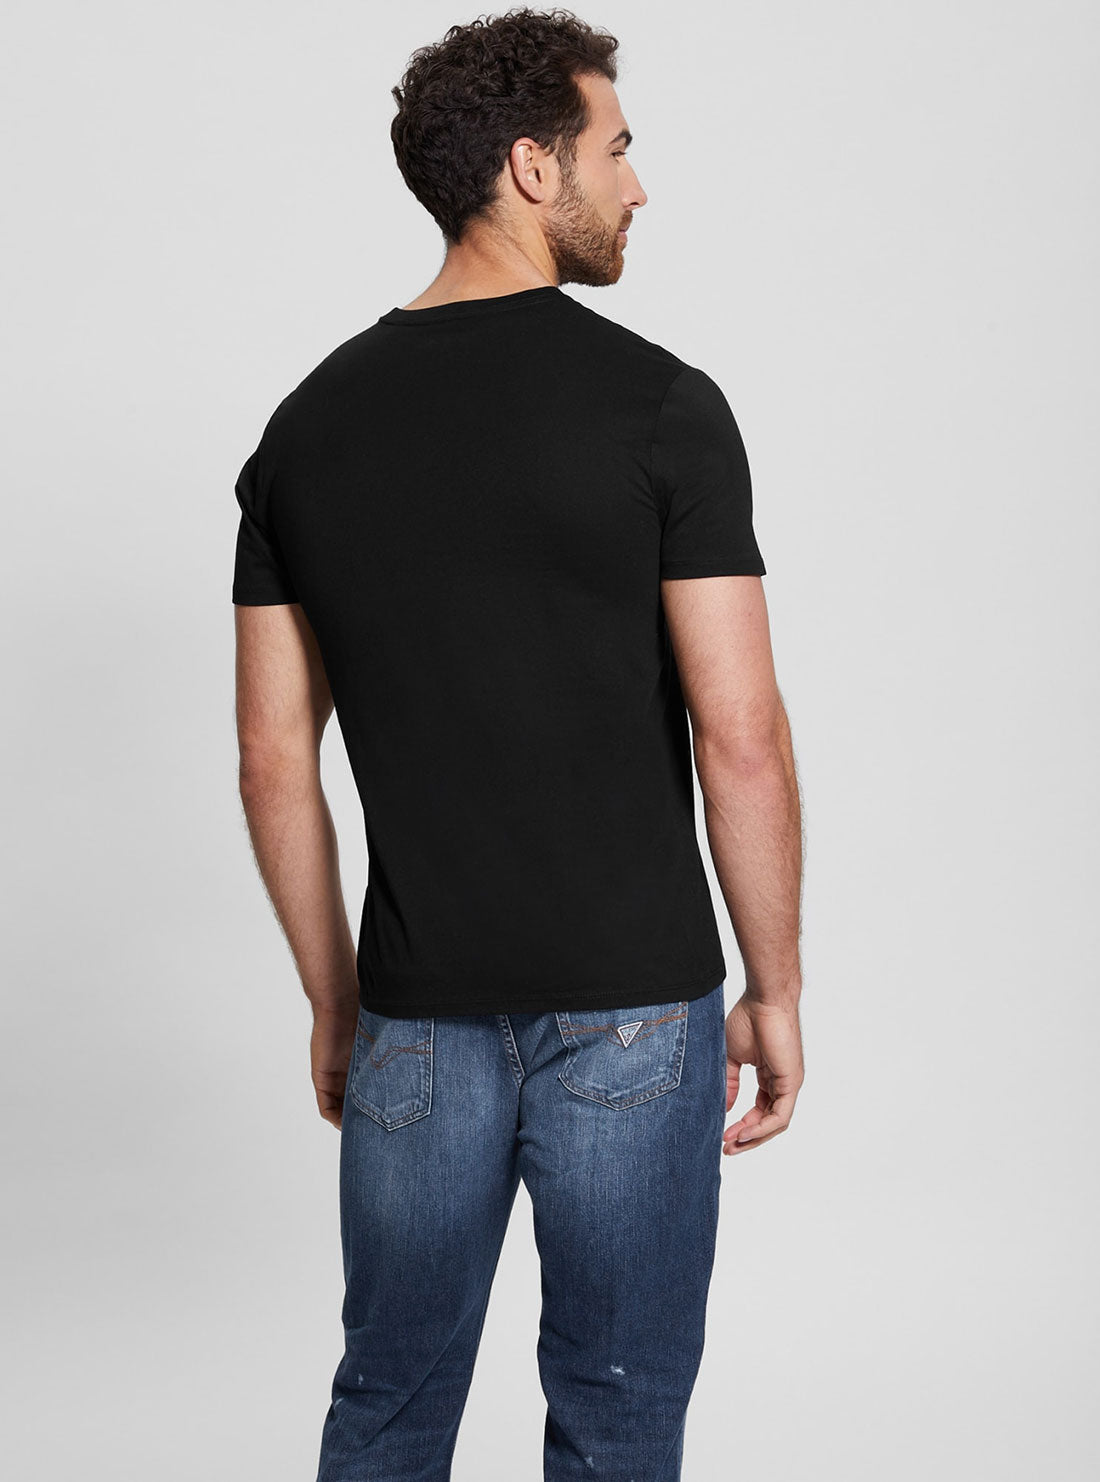 Eco Black Embossed Logo T-Shirt | GUESS Men's | Back view